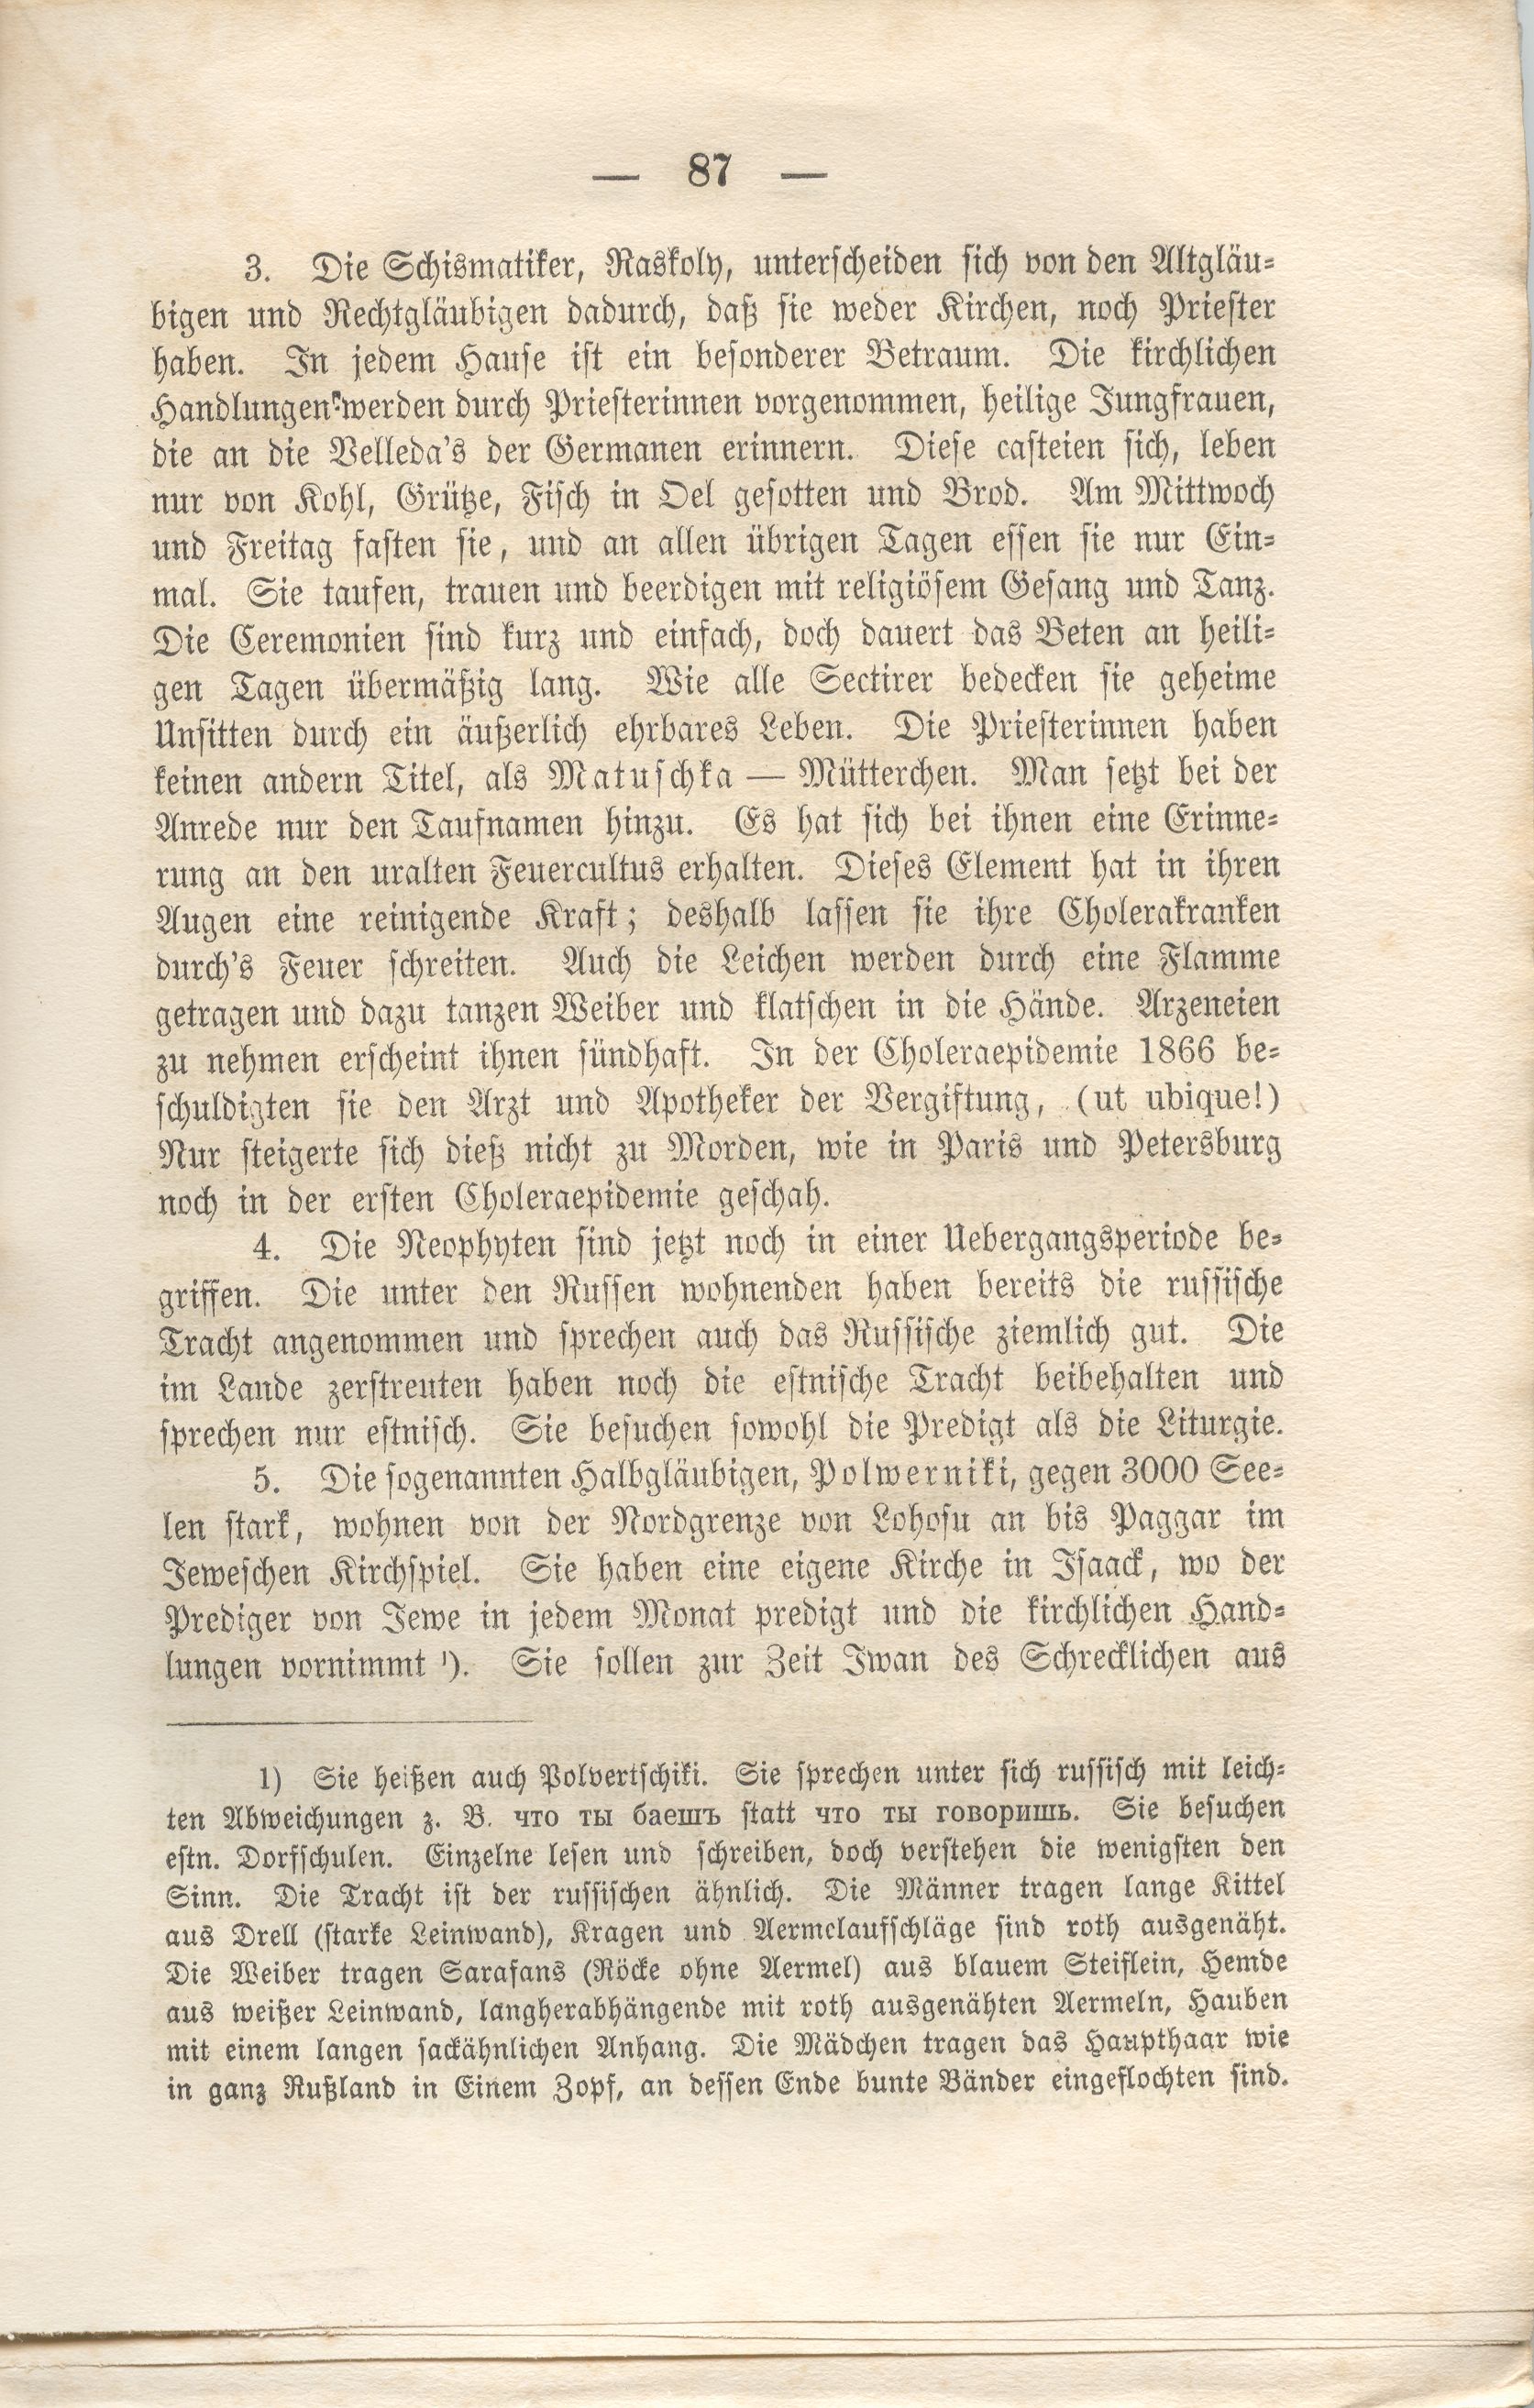 Wagien (1868) | 91. (87) Основной текст